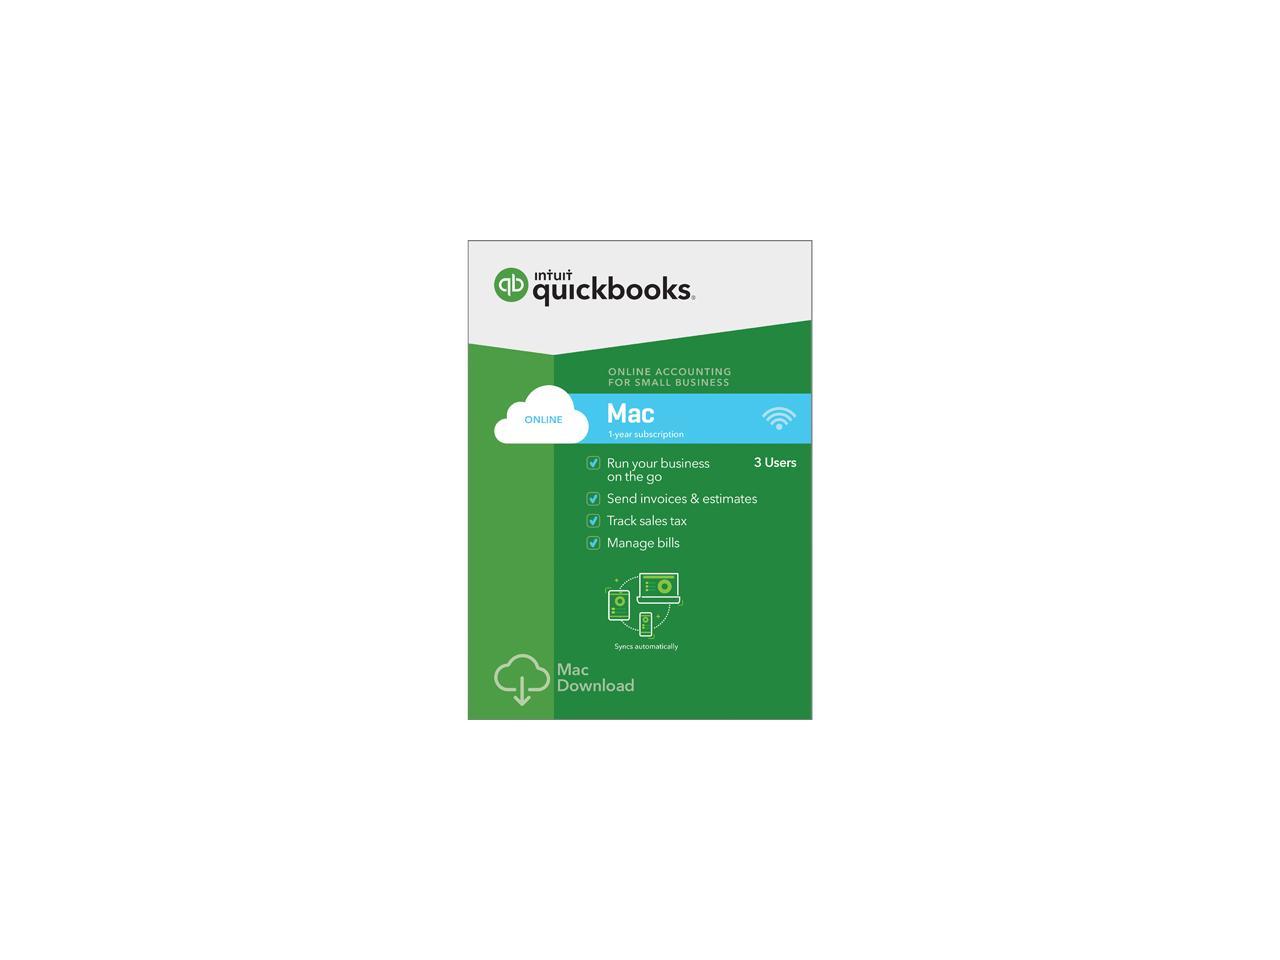 quickbooks 2019 for mac download